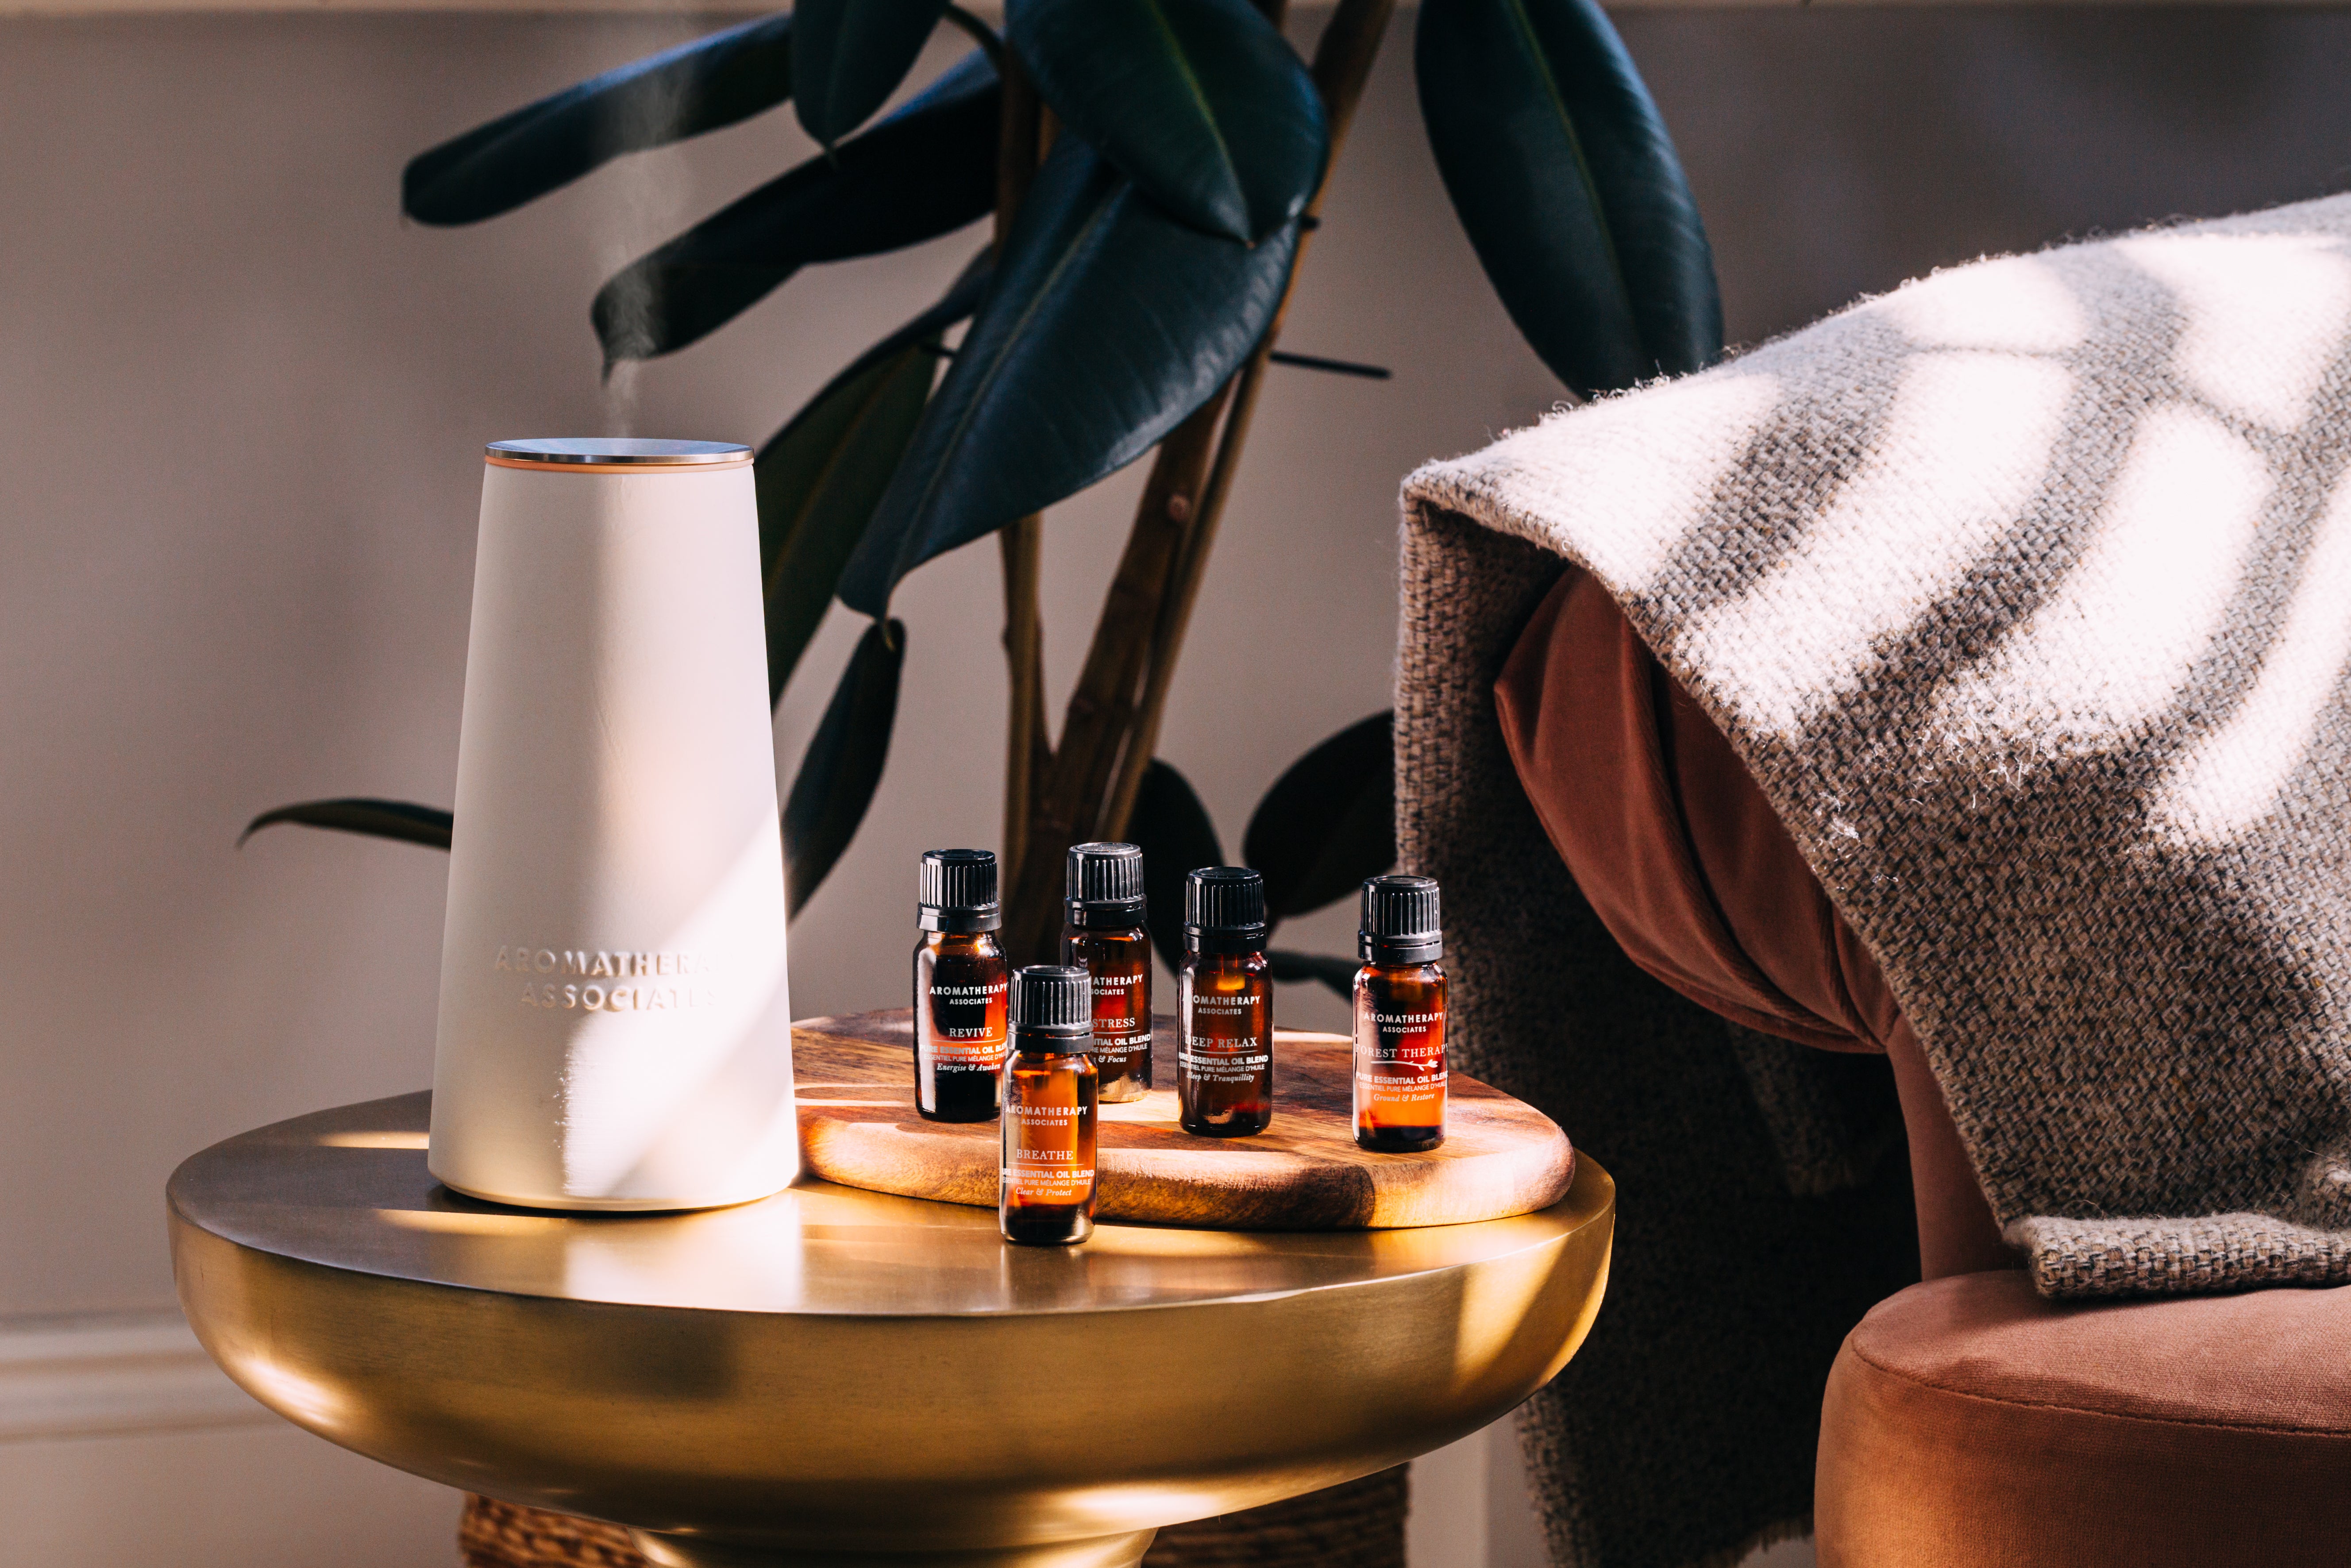 Breath Aromatherapy Essentials Blend - 100% Pure Essential Oils